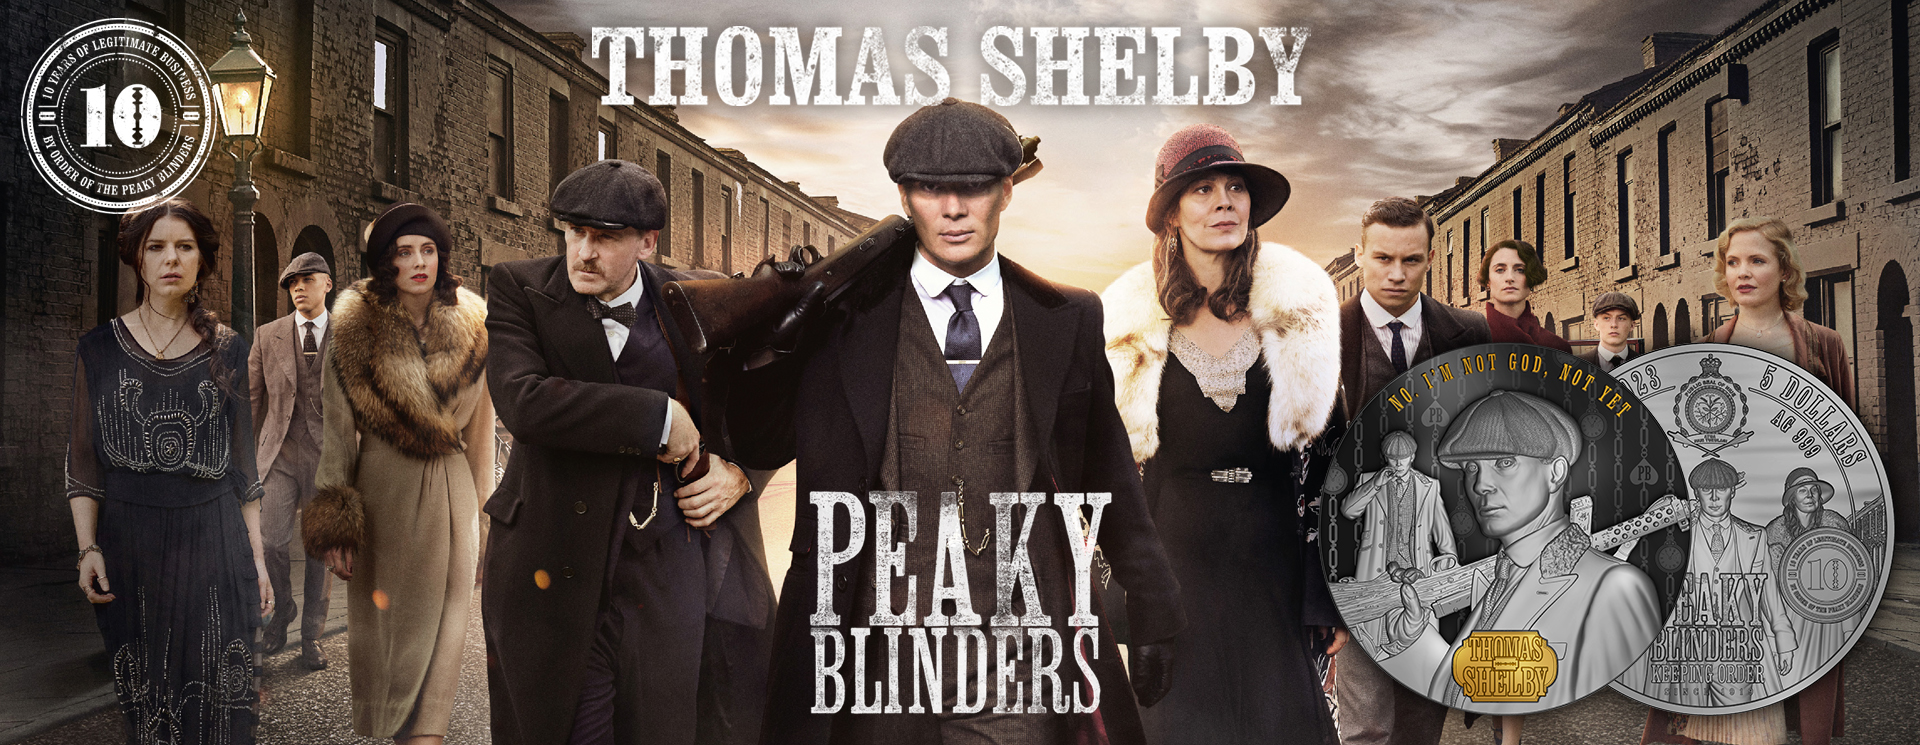 thomas-shelby-peaky-blinders-2oz-23-banner